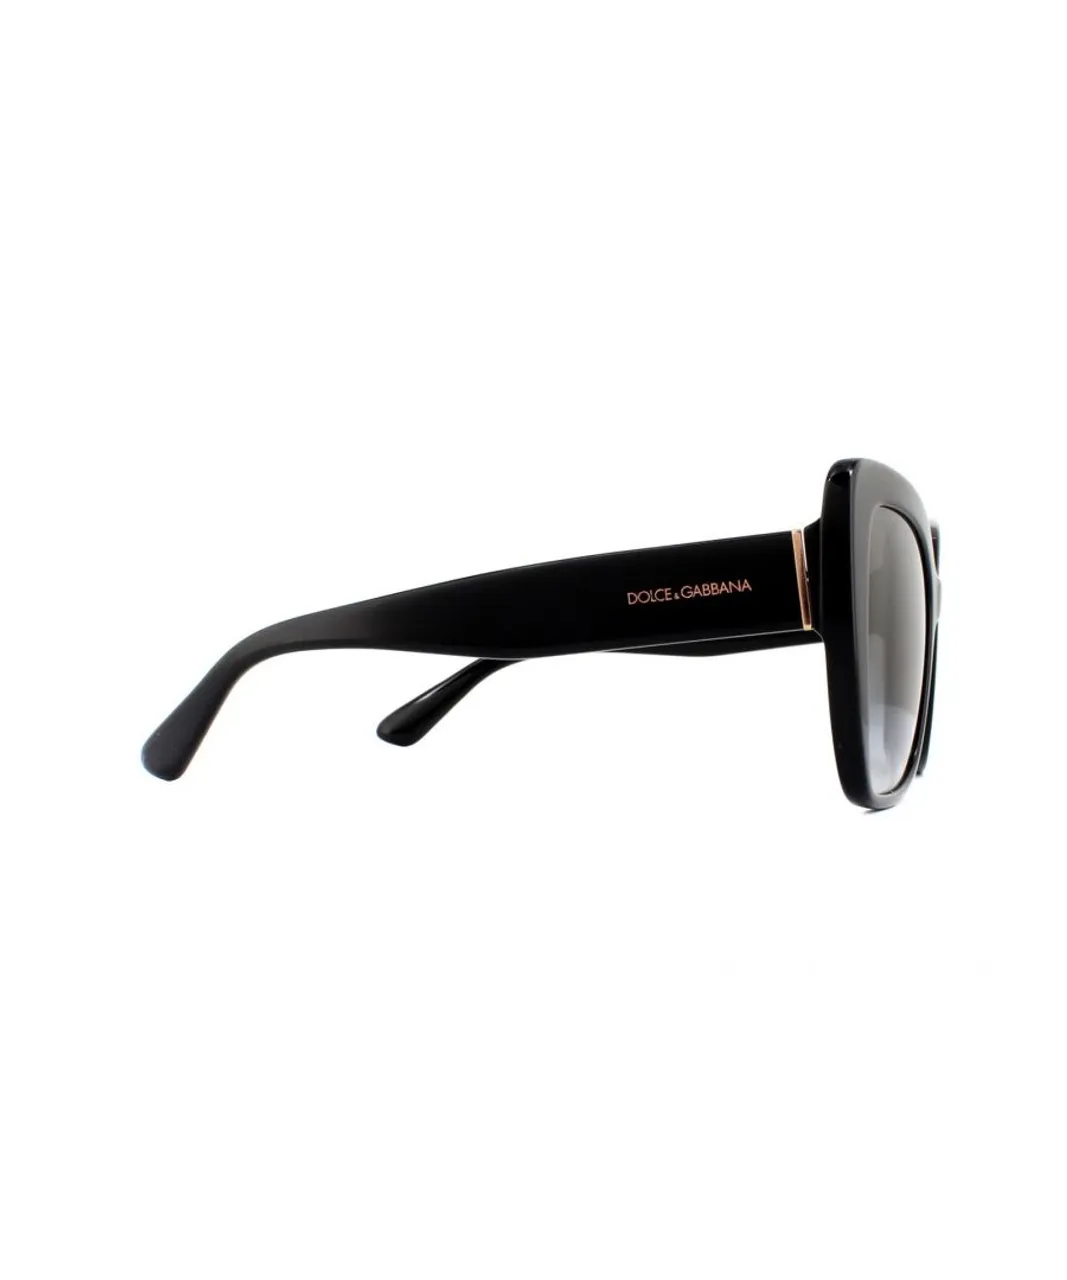 Dolce & Gabbana Womens Sunglasses DG4348 501/8G Black Grey Gradient - One